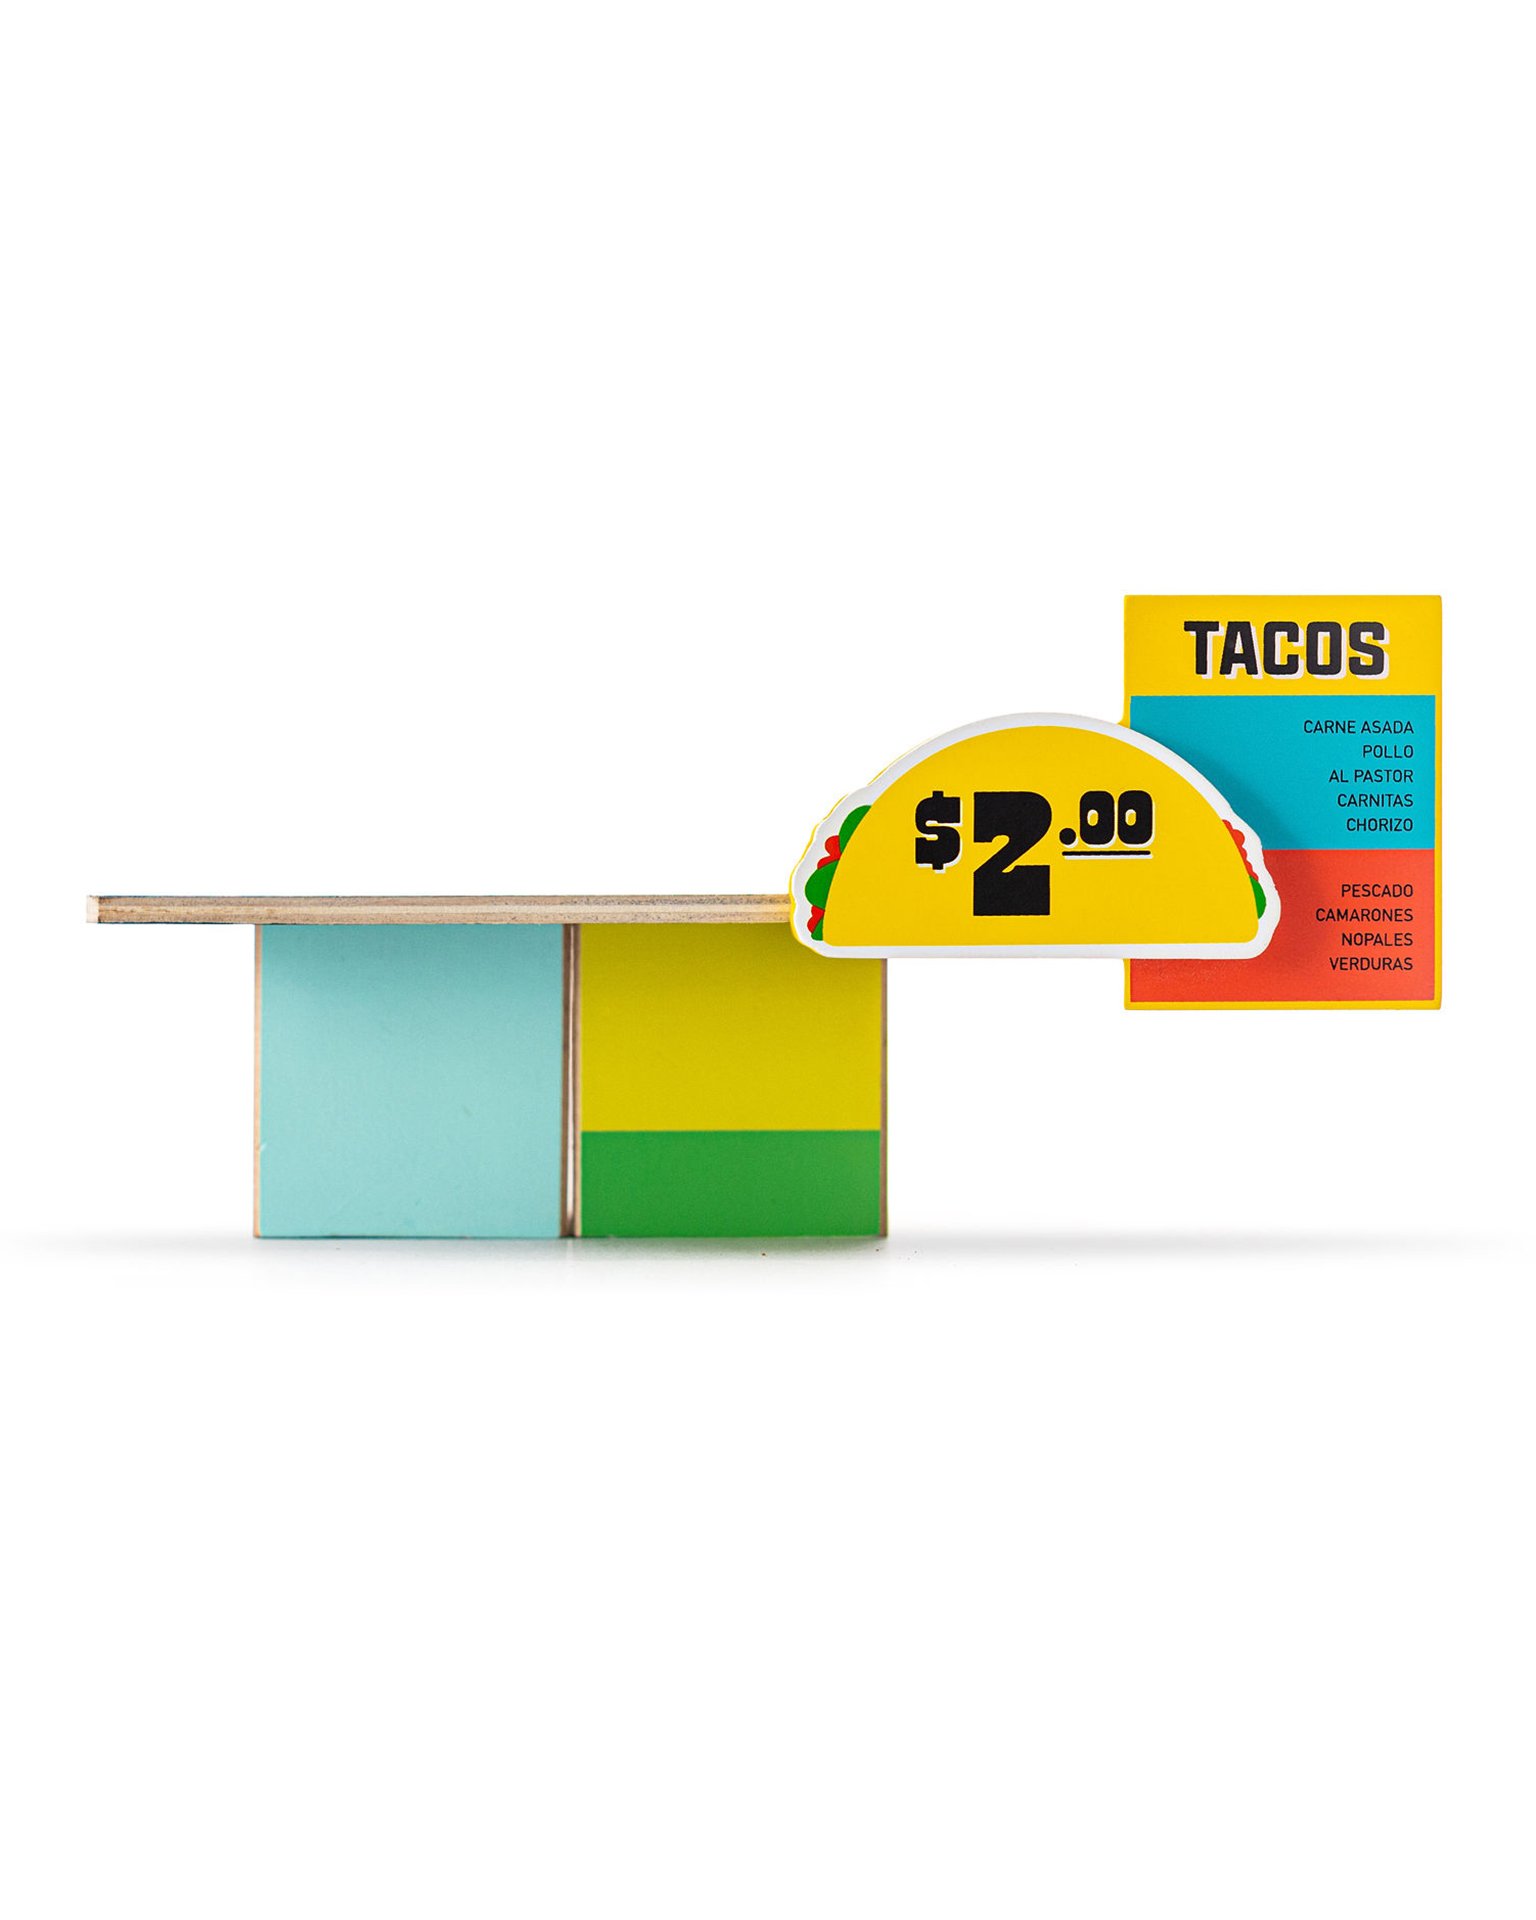 Little candylab play taco food shack